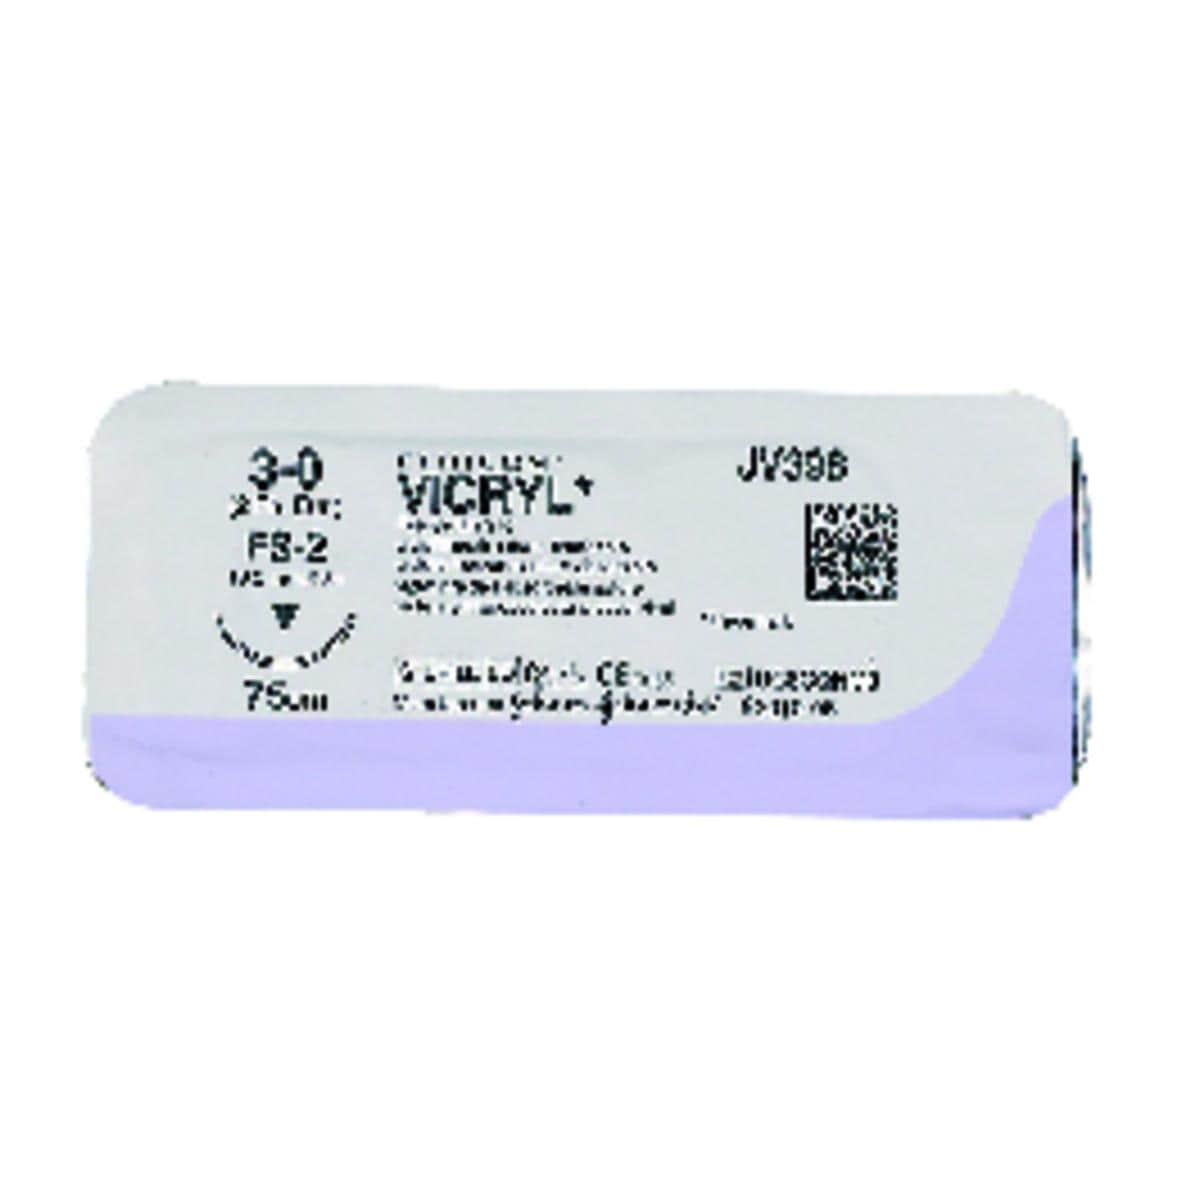 Fil Vicryl violet ETHICON - JV398 - Bote de 36